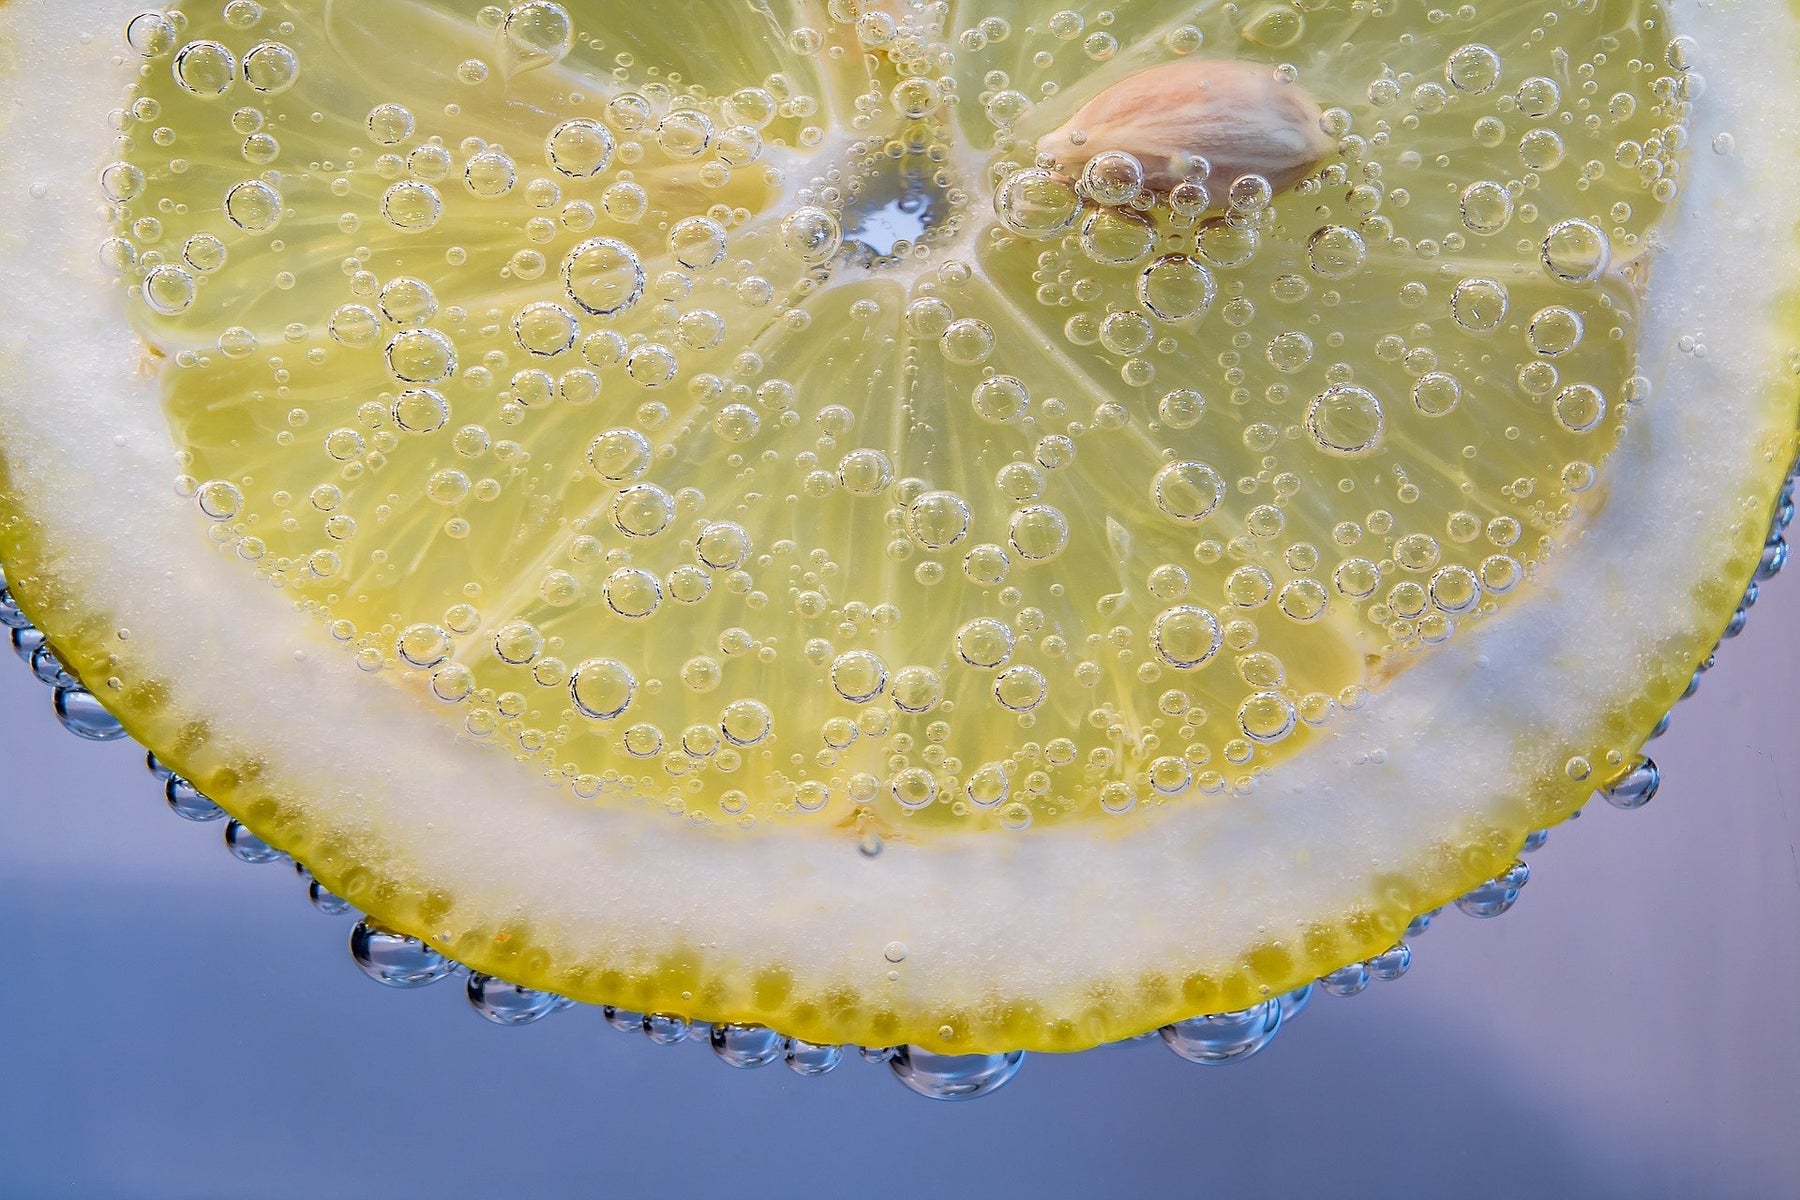 Drops of water poring down a slice of lemon